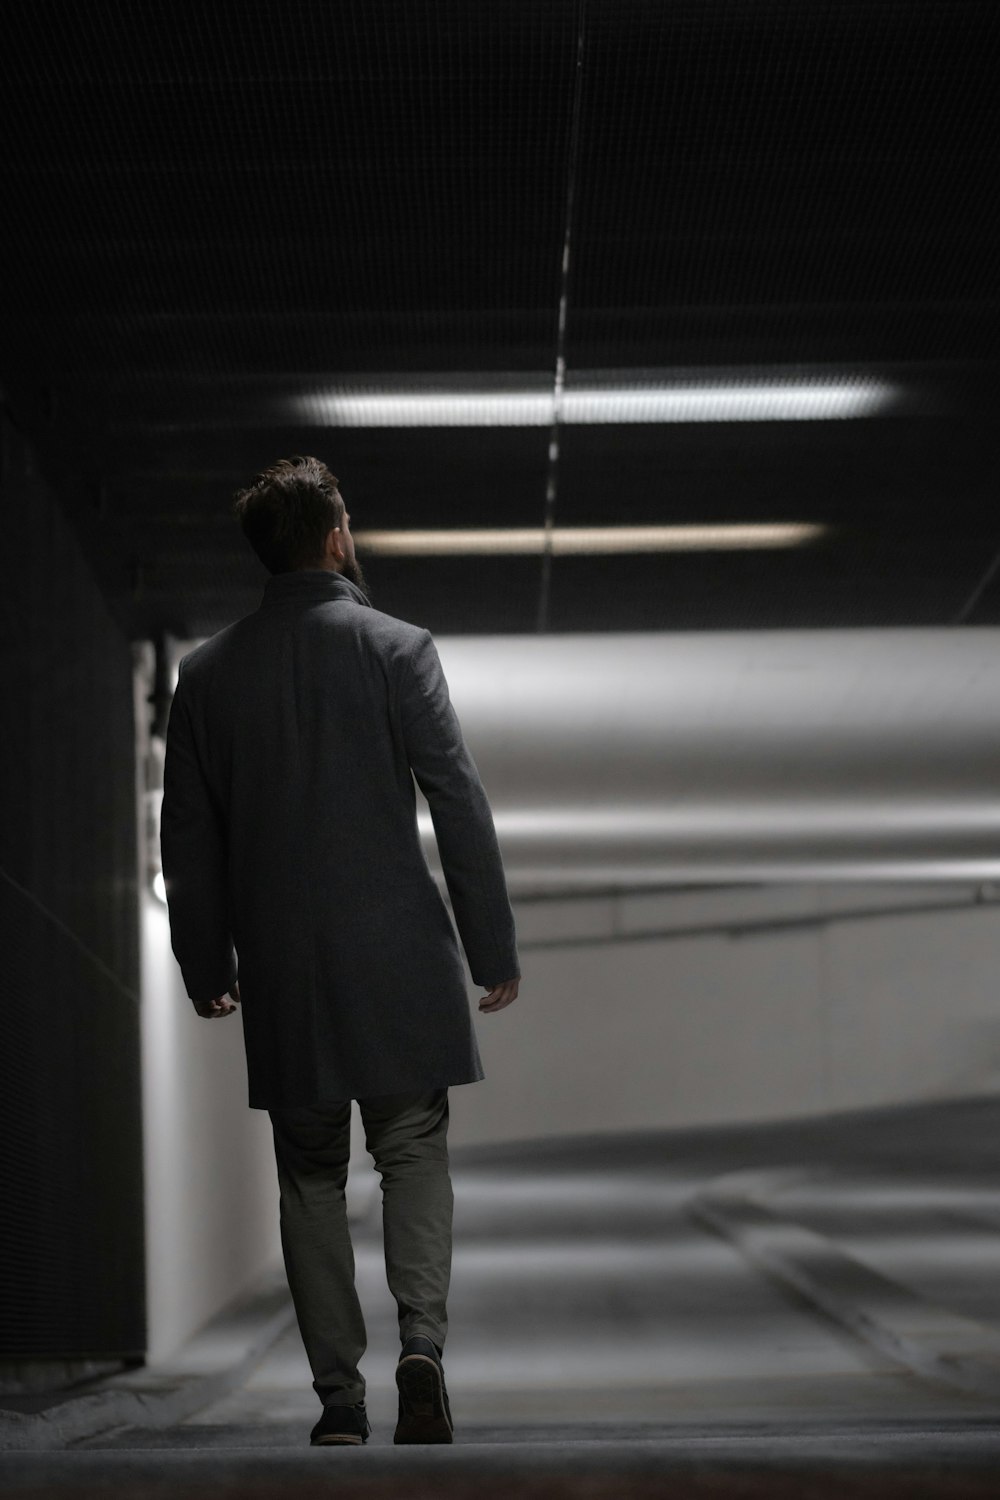 a man is walking down a dark tunnel